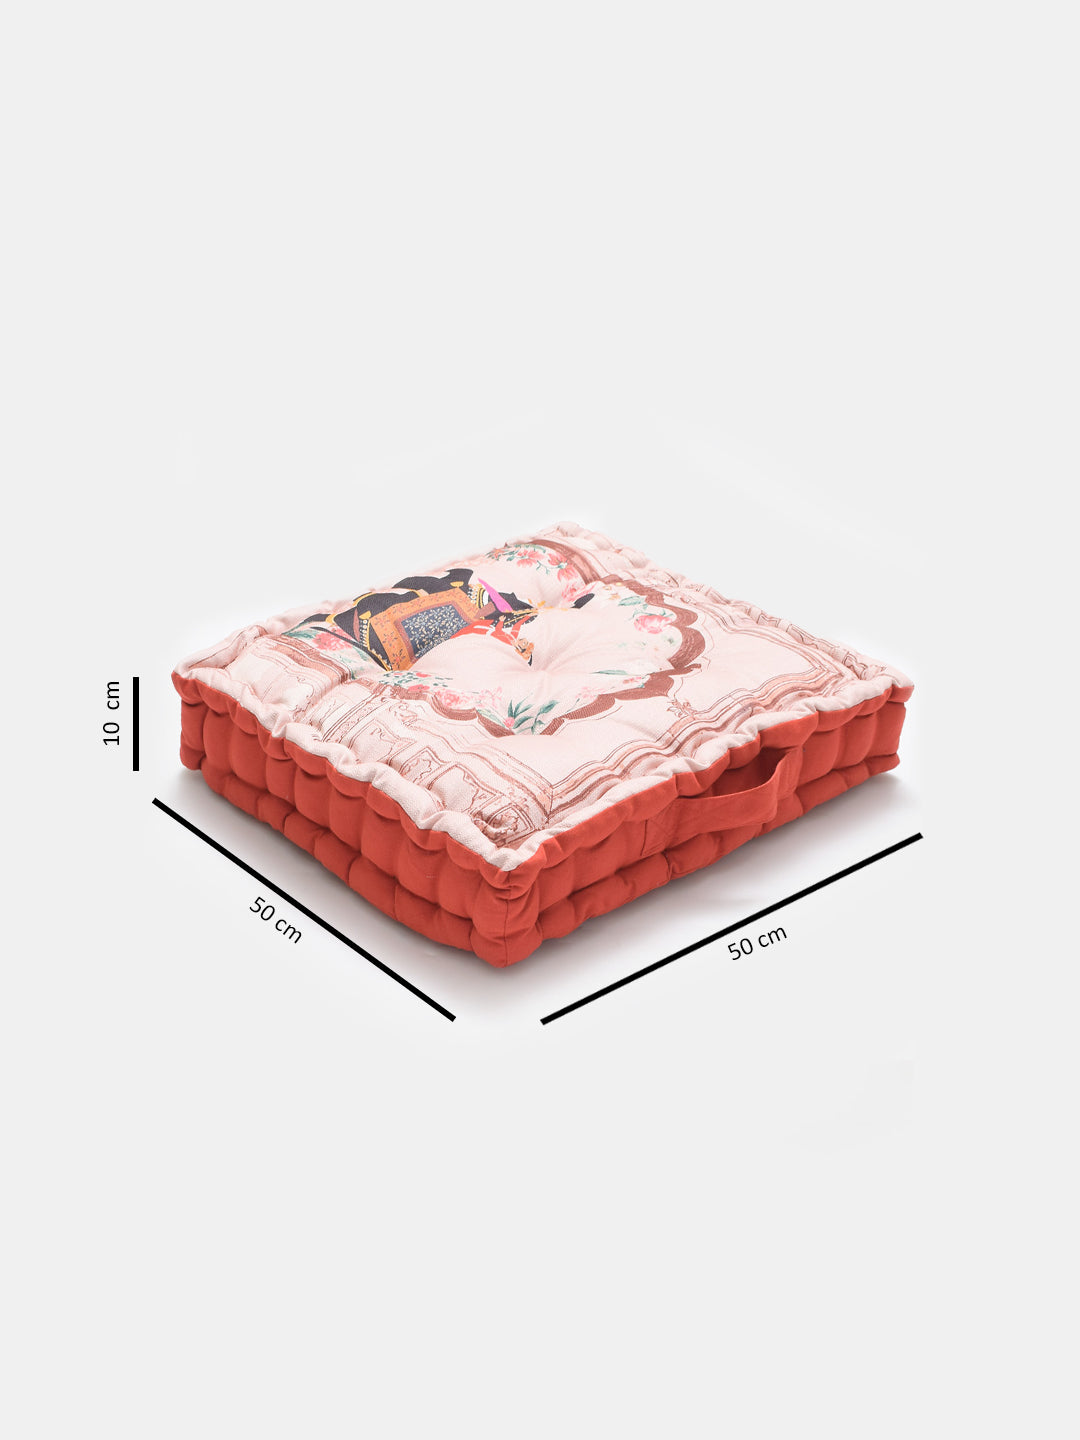 Blanc9 Tusker Digitally Printed Floor Cushion